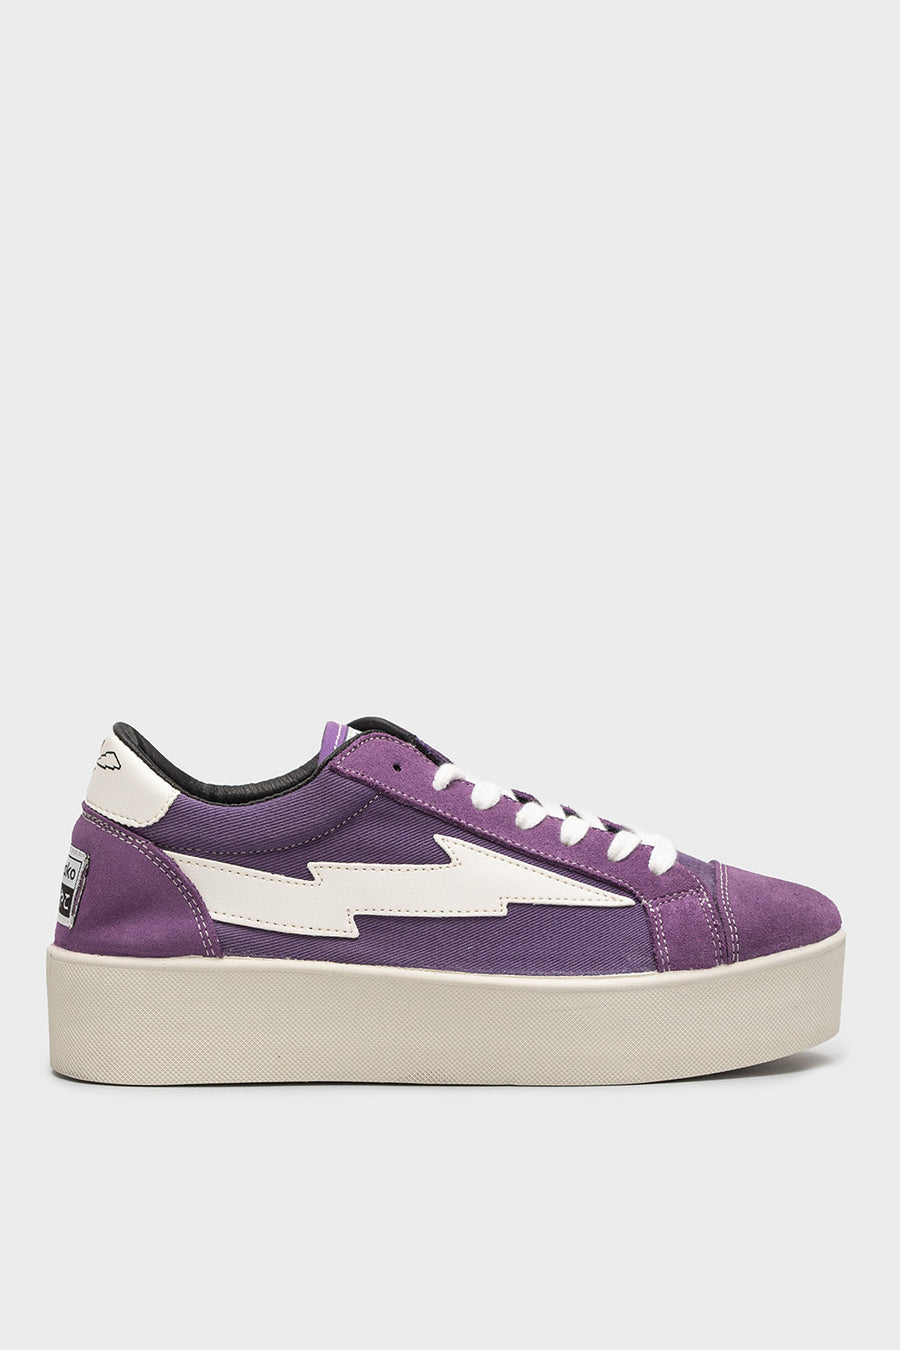 Sneakers Sanyako in tessuto viola e bianco thuw032